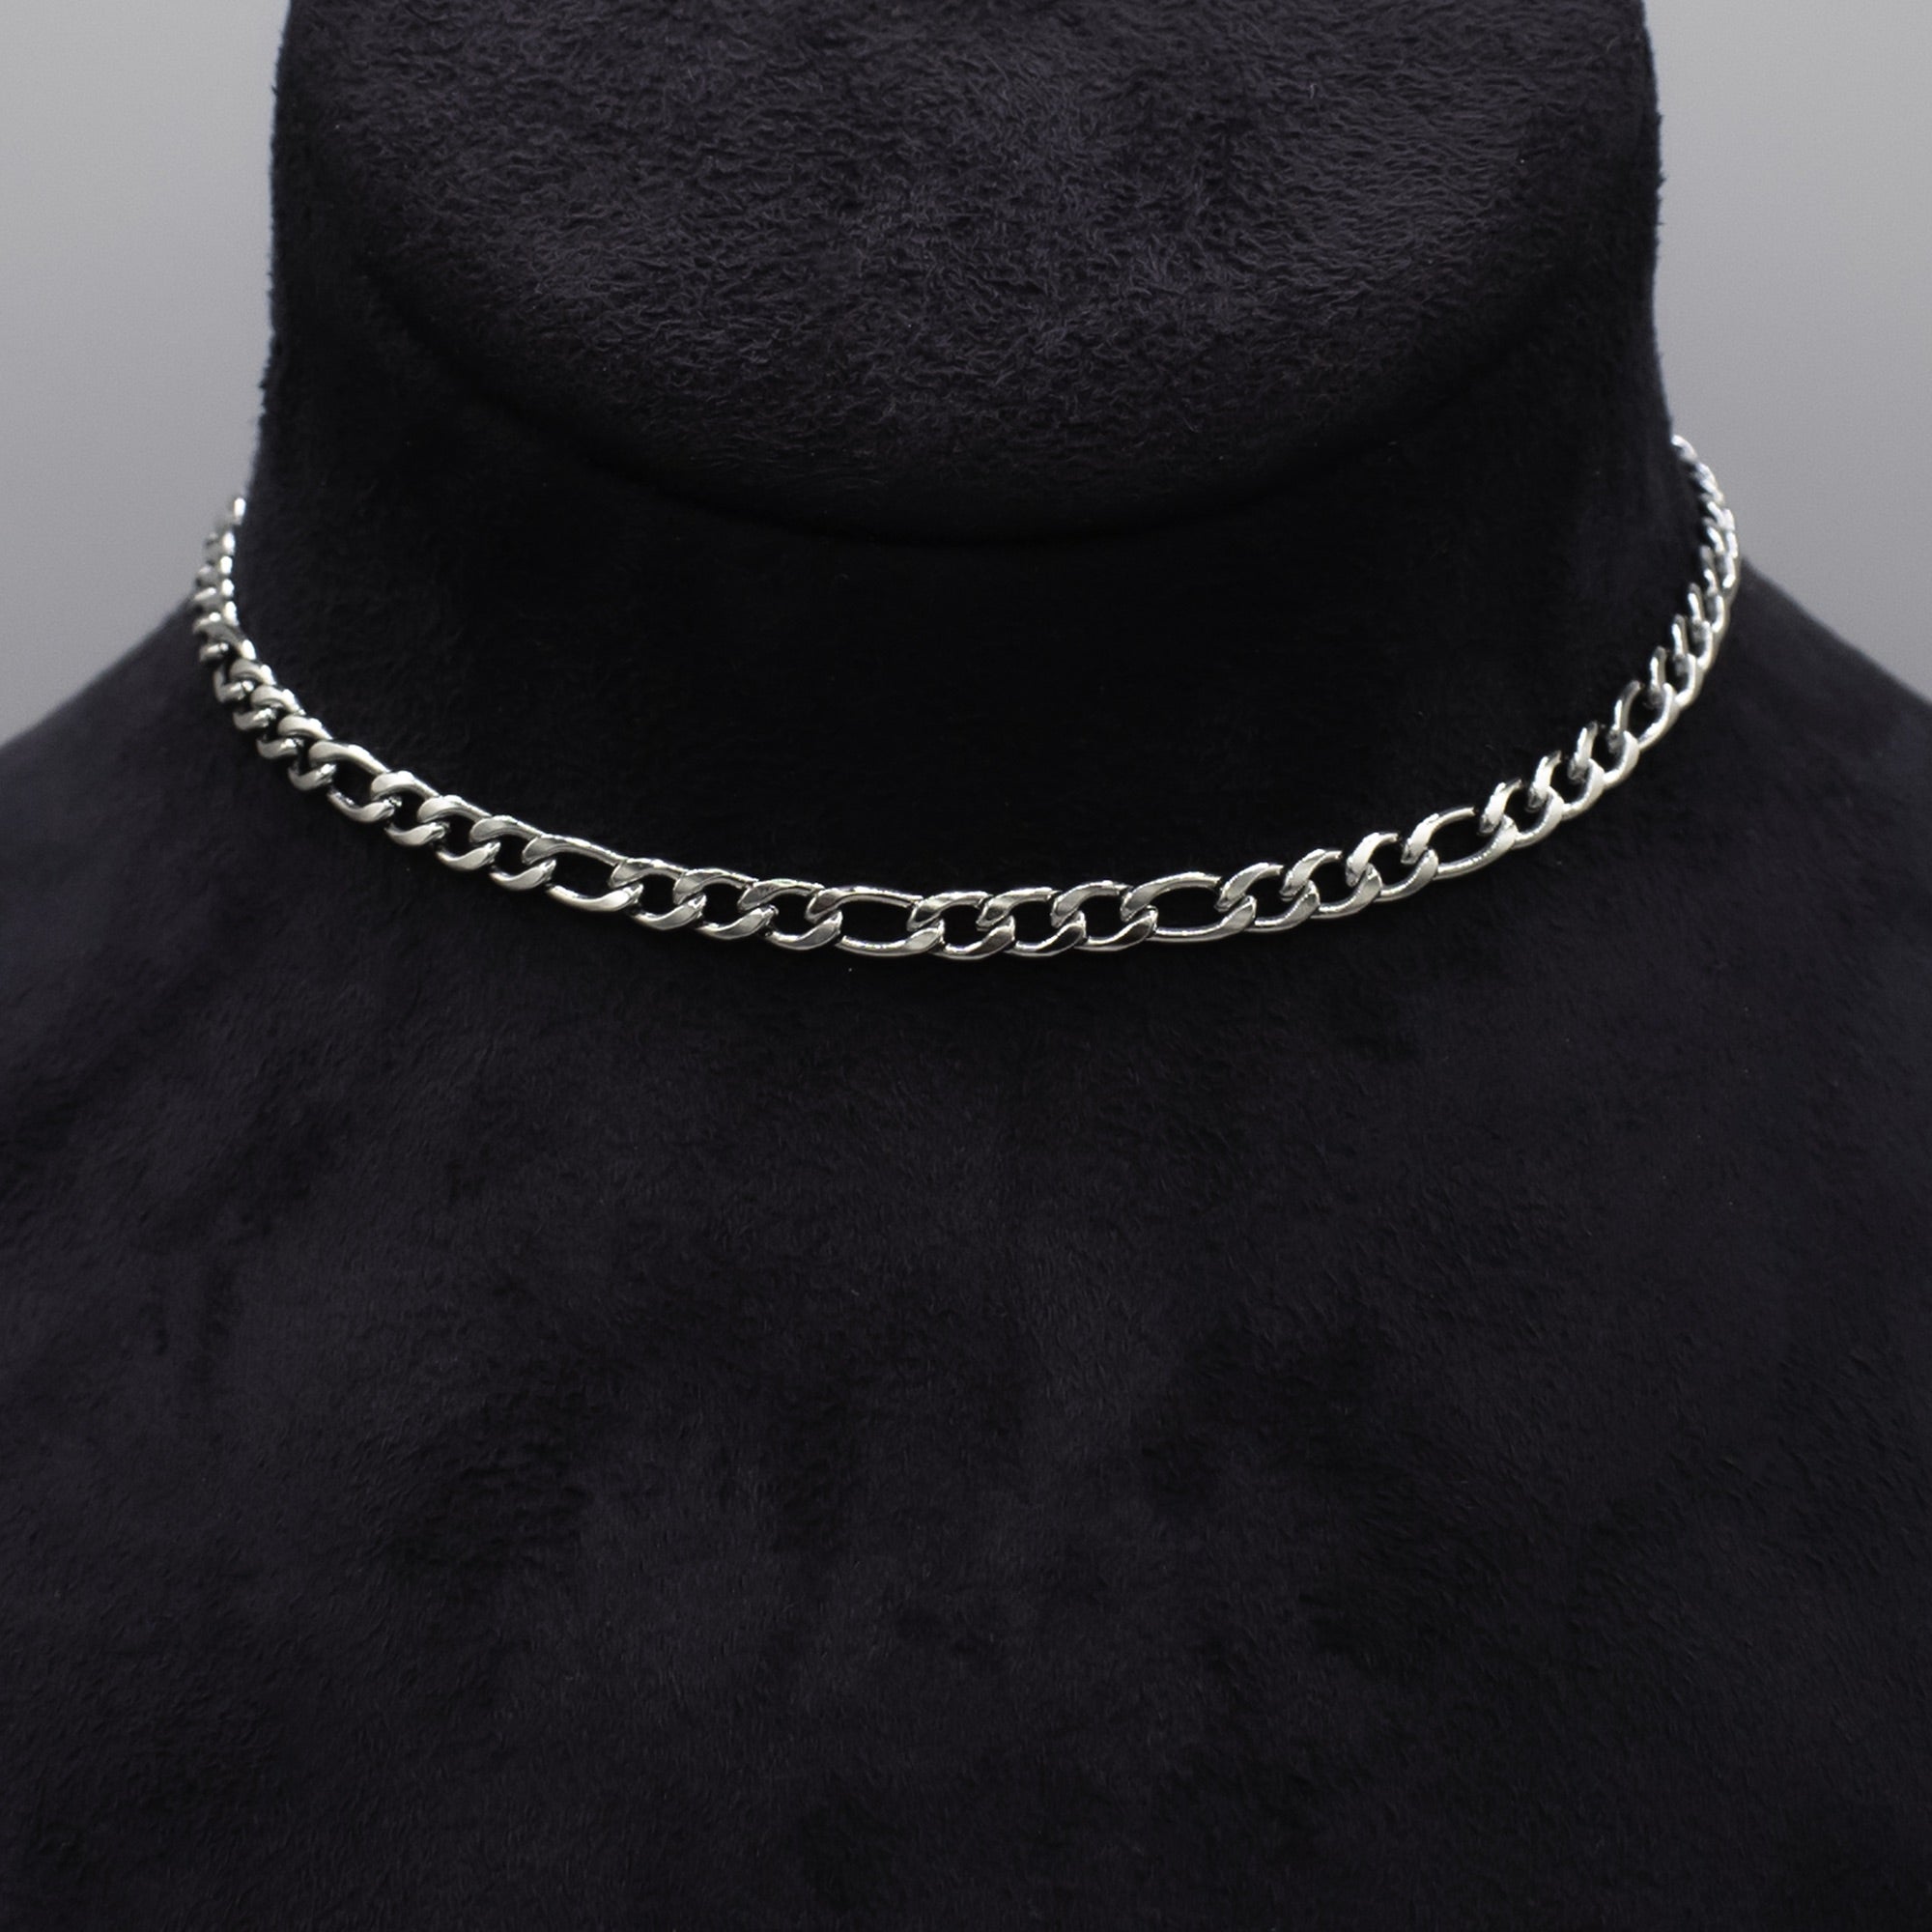 5mm figaro choker necklace